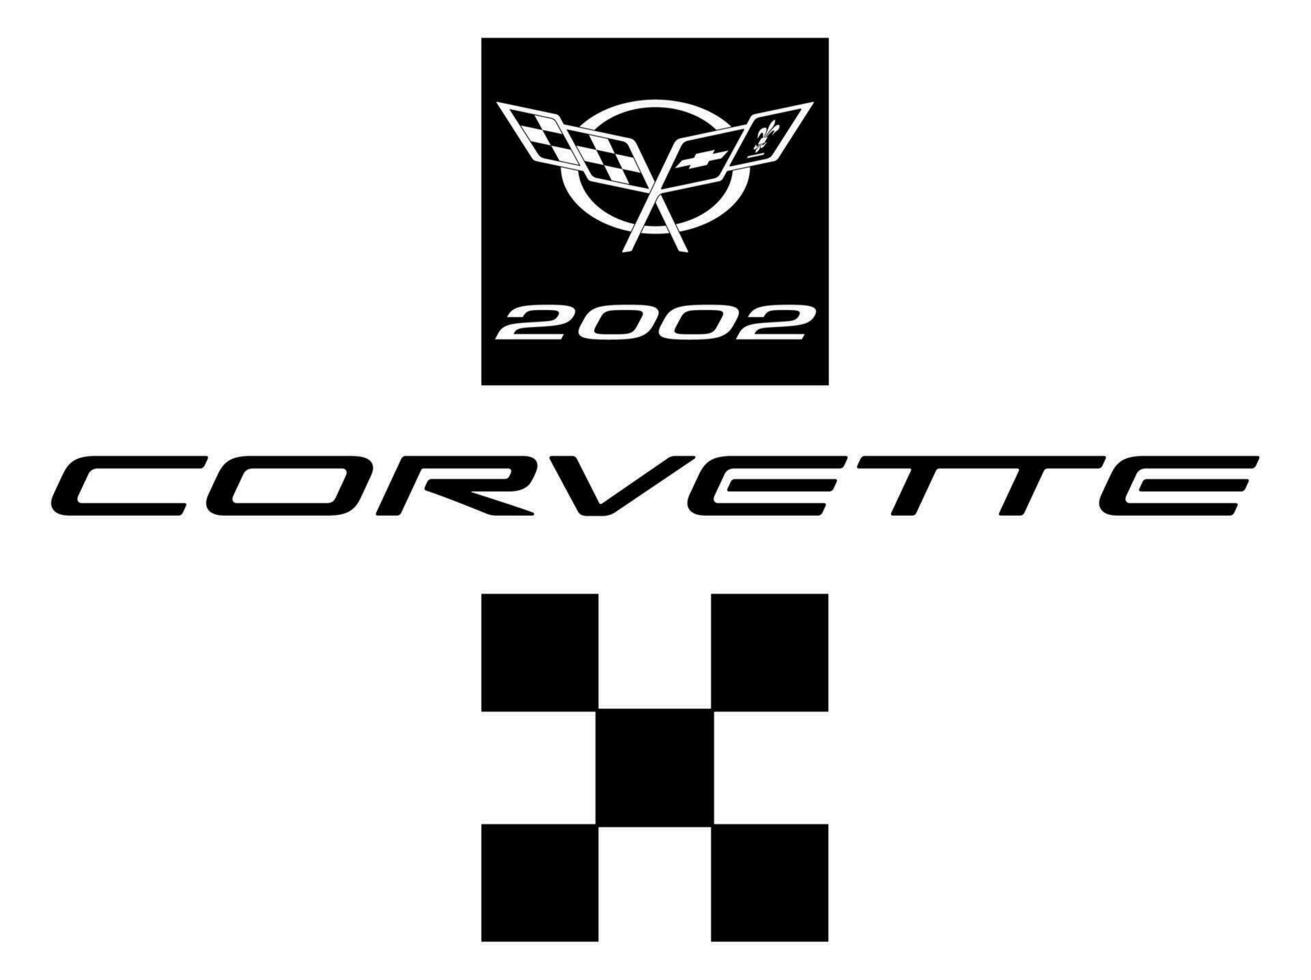 Chevrolet korvett logotyp vektor illustration